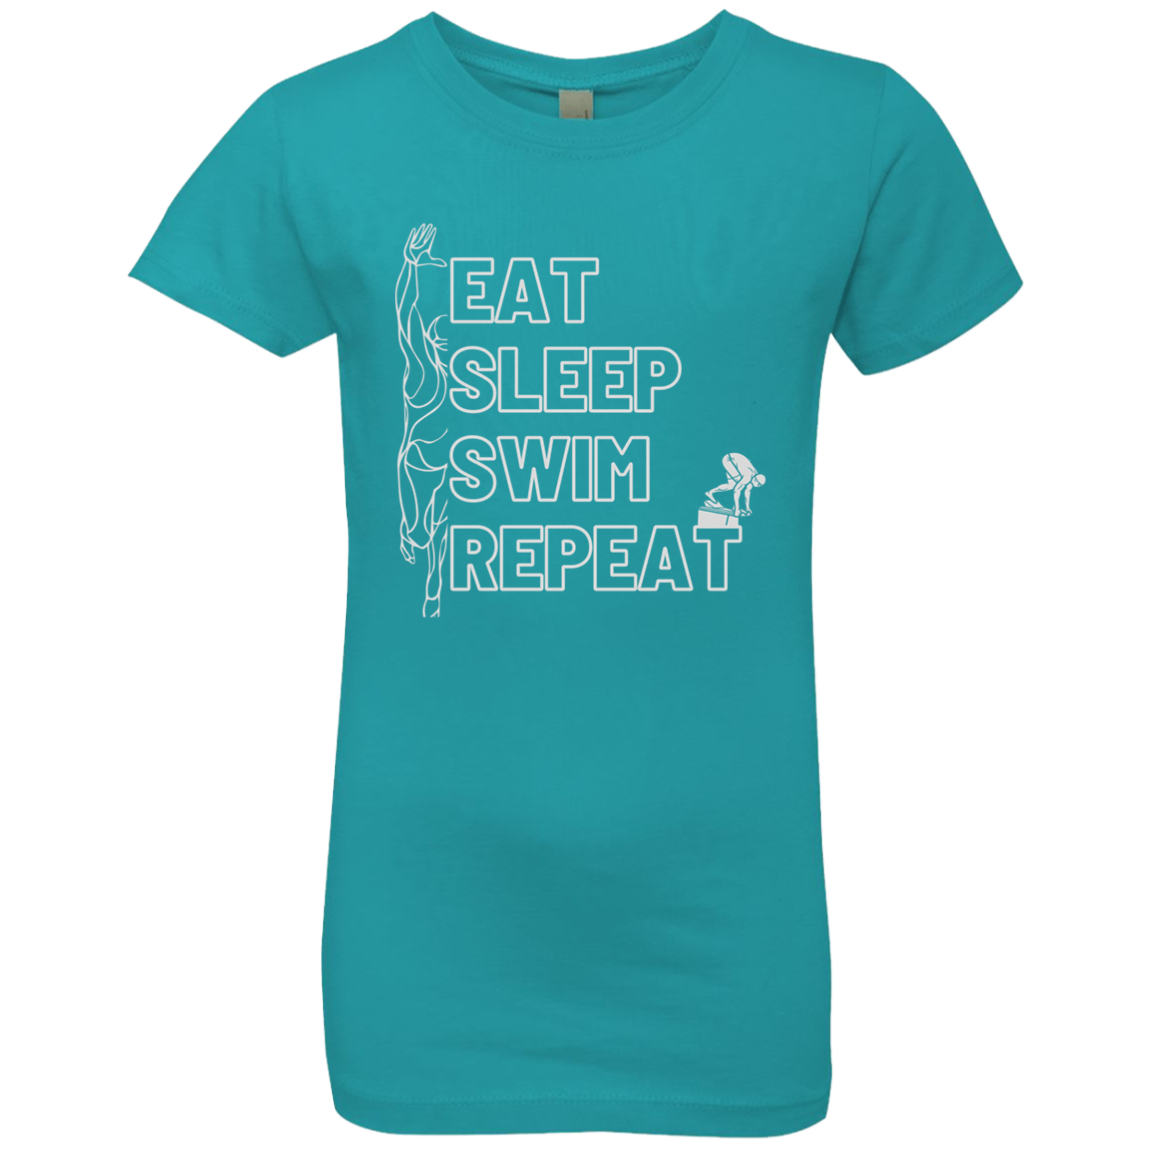 Eat, Sleep, Swim, Repeat- Girls' Princess T-Shirt